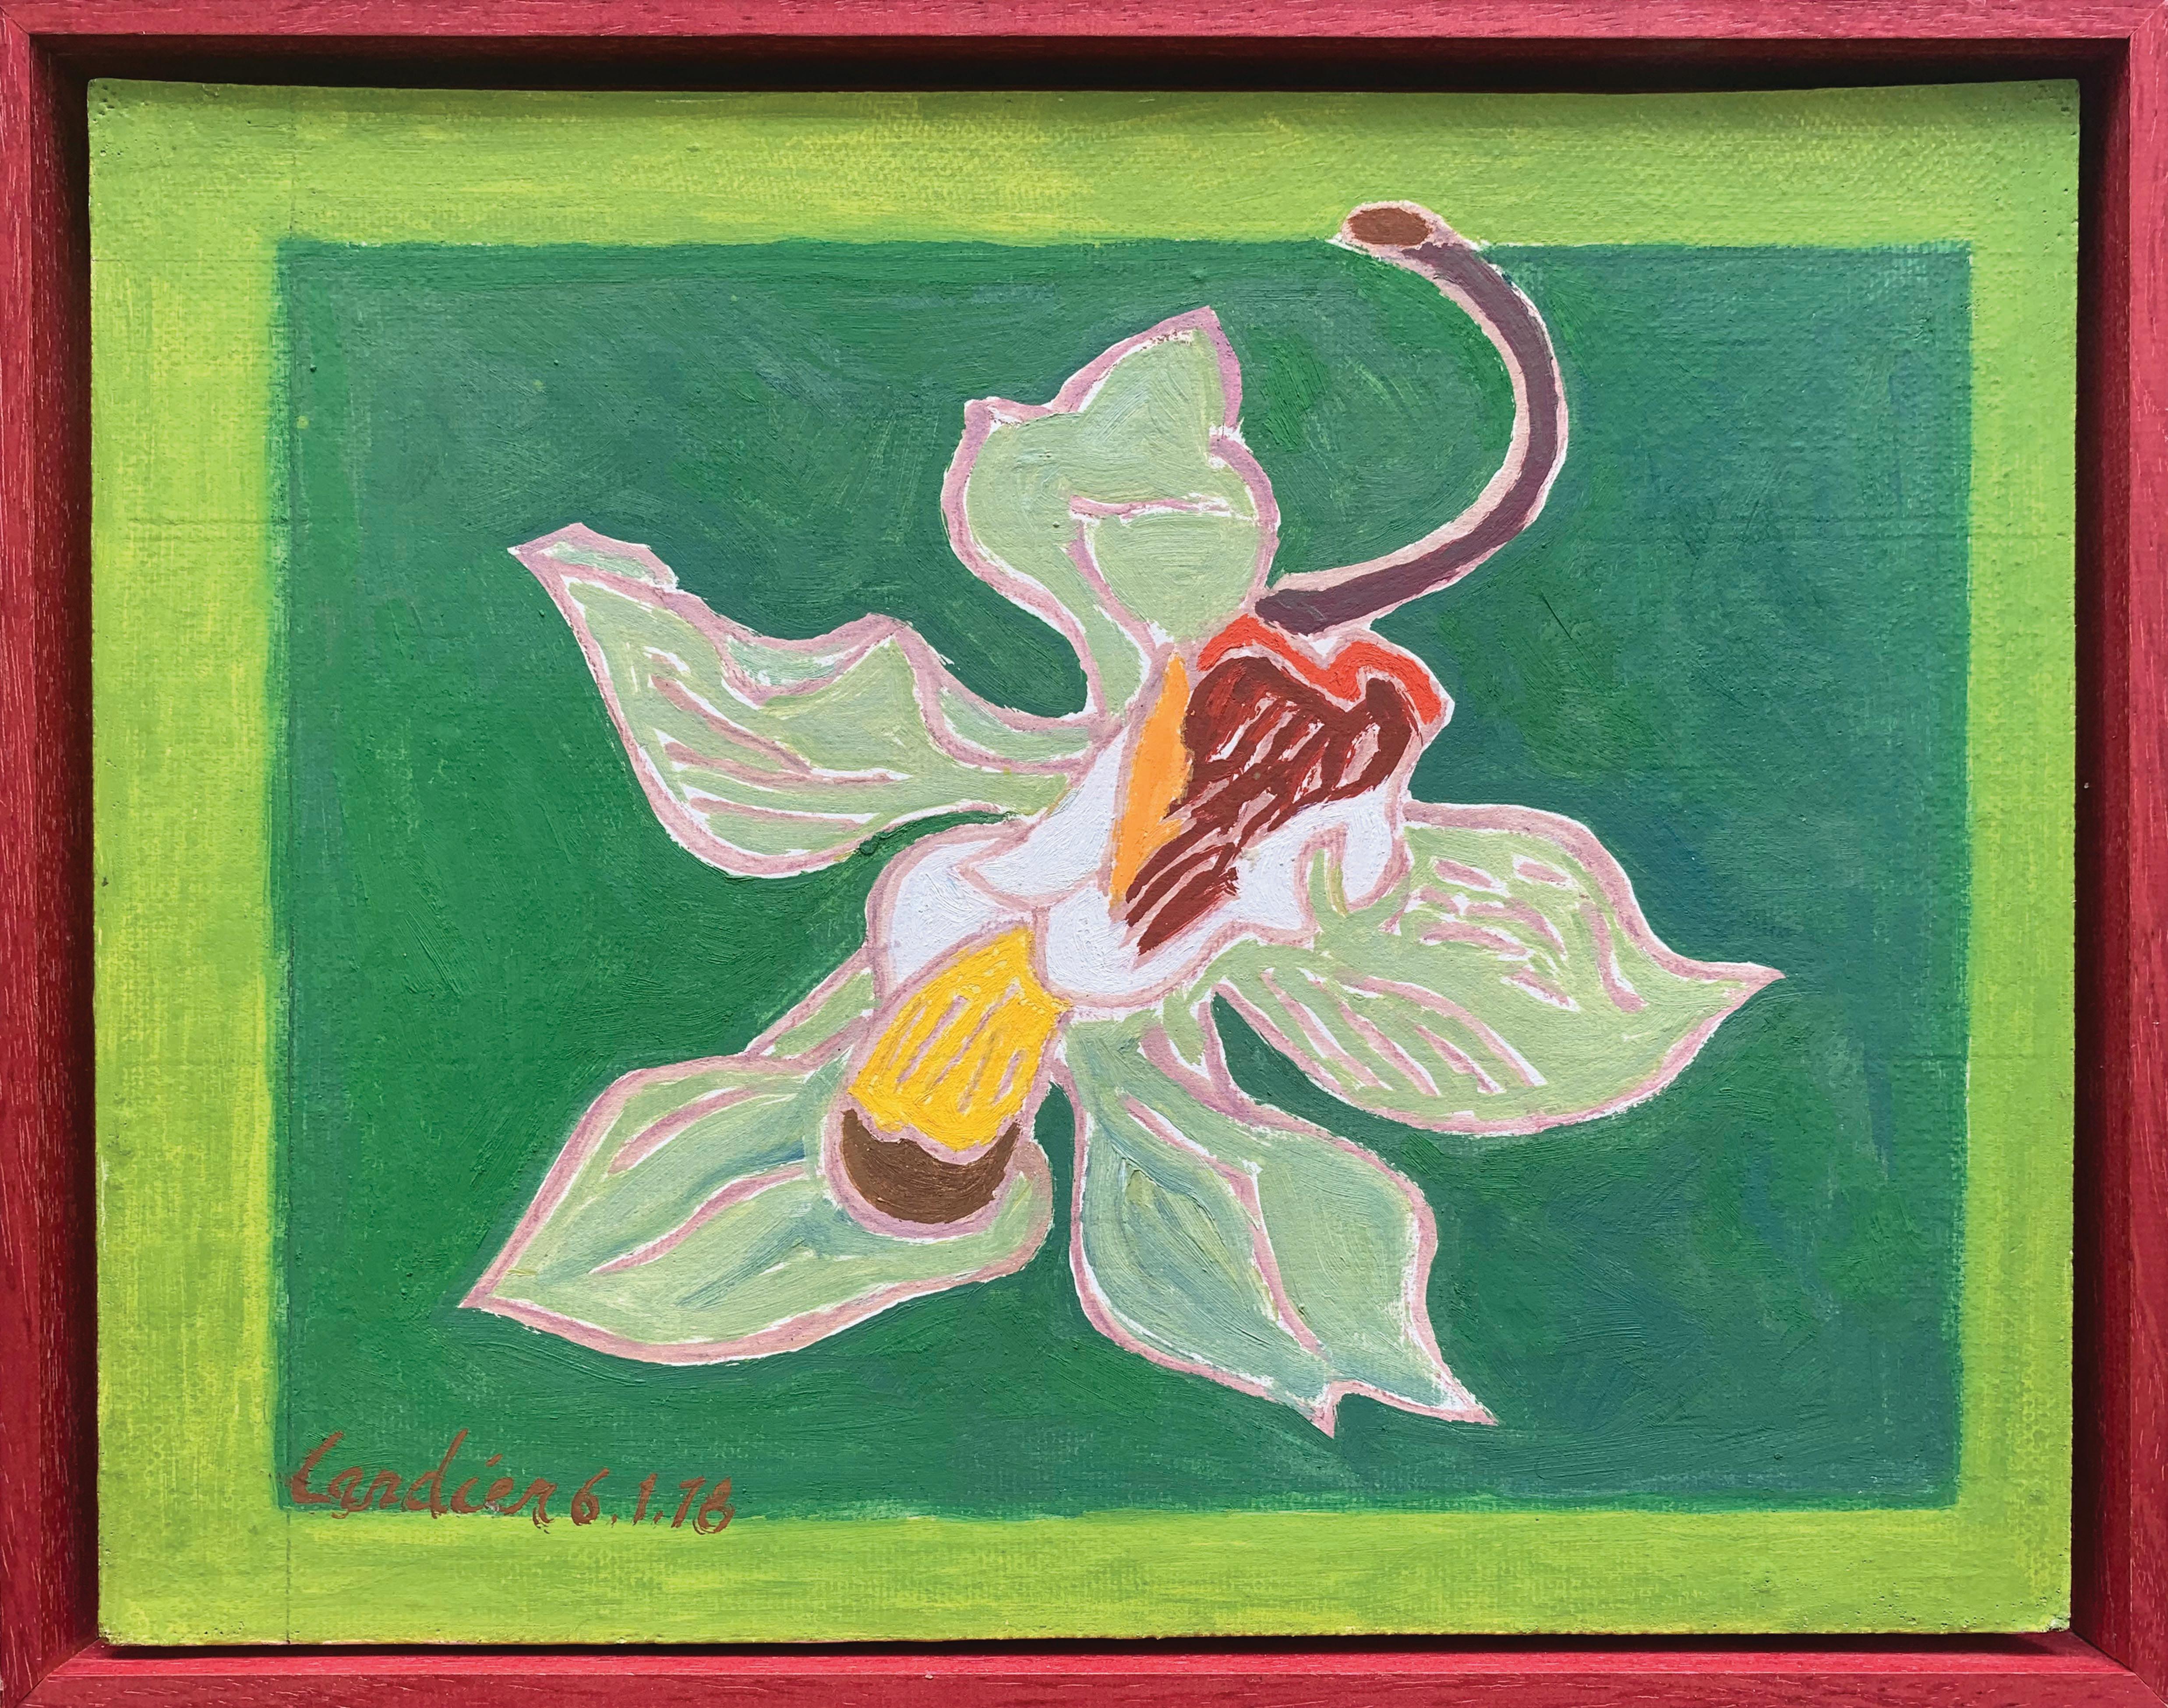 L'orchidee Verte - Painting by Henri Landier